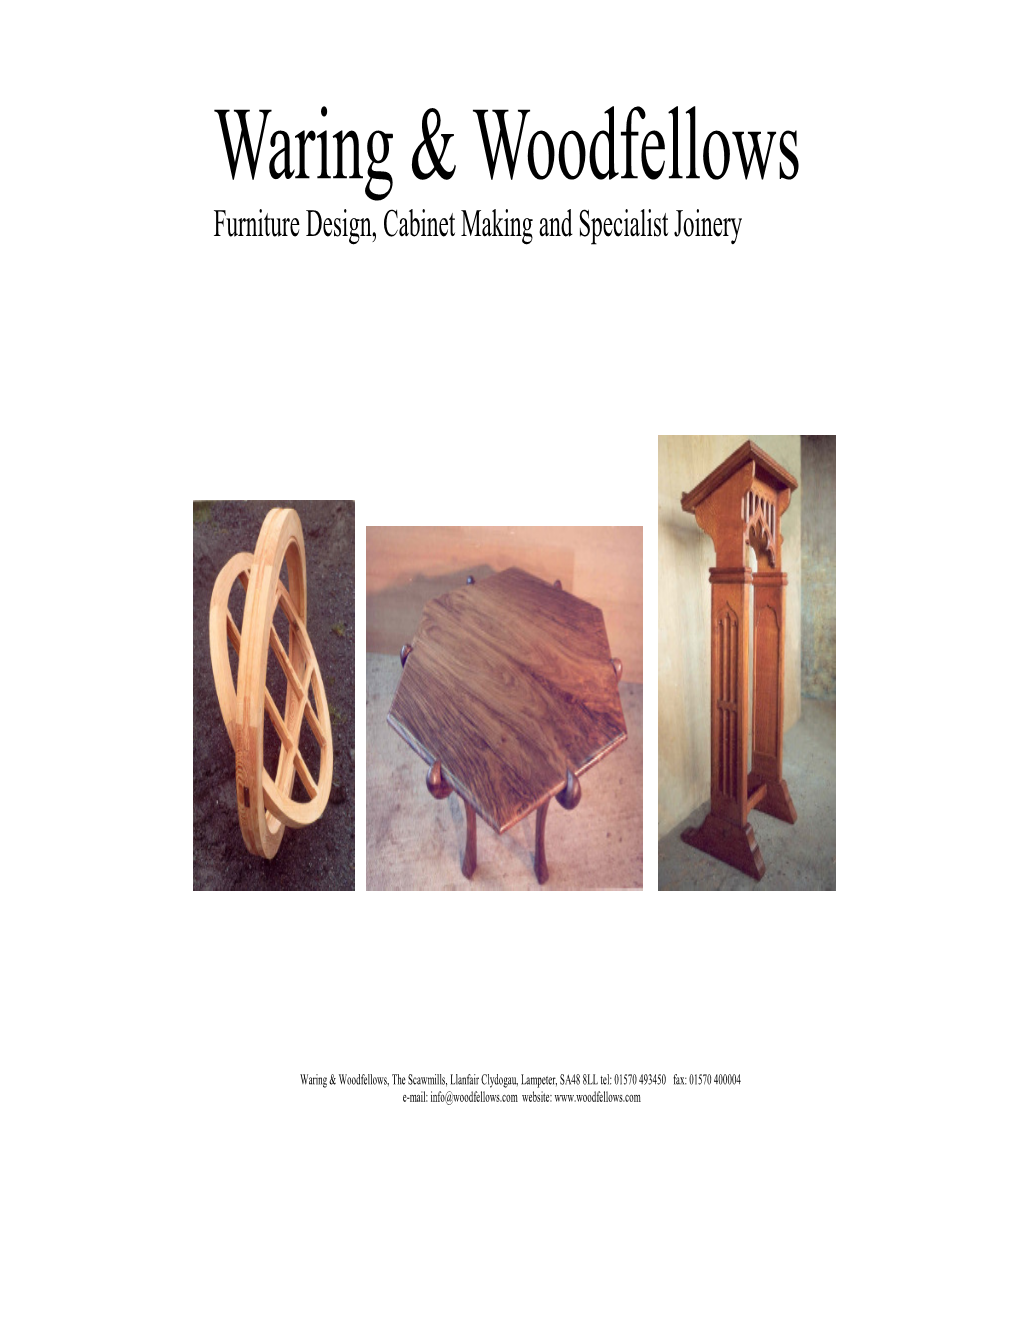 Waring & Woodfellows